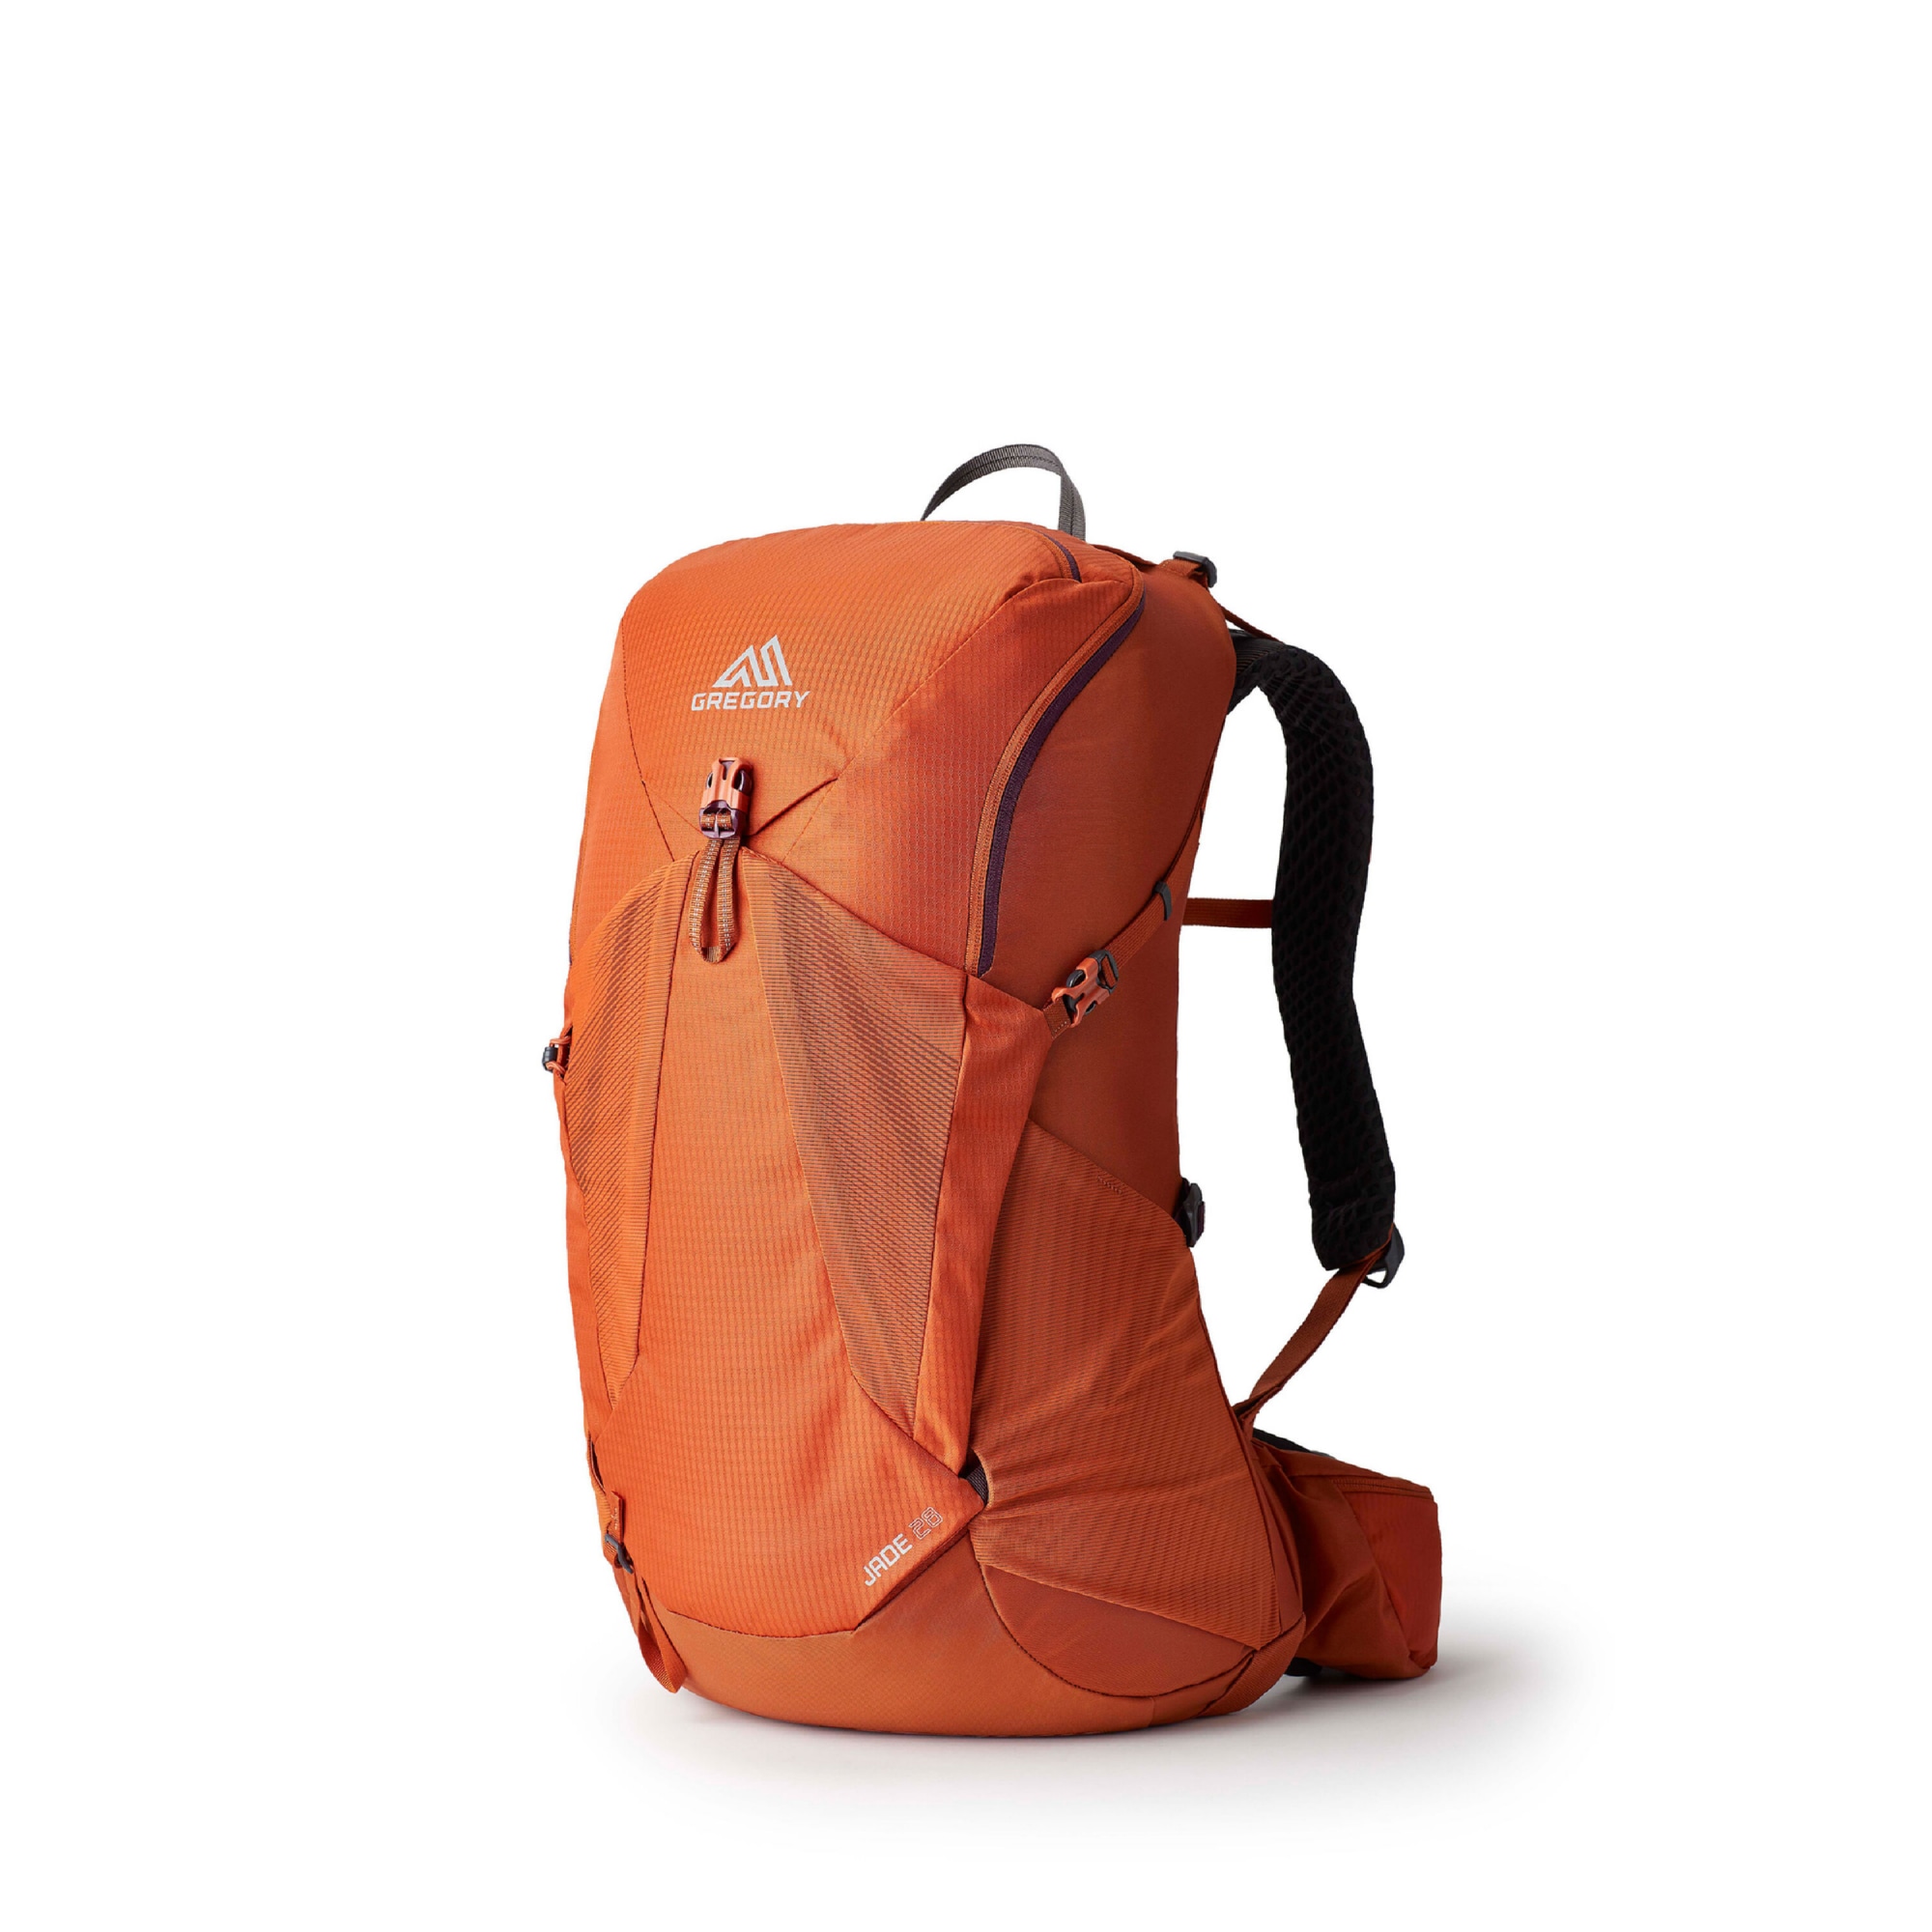 AMPEX Hiking Backpack  Camping Essentials Lightweight Backpack for Men &  Women, Travel Bag for Hunting & More, Black, 50 Liter, 50 Liter :  : Sports & Outdoors